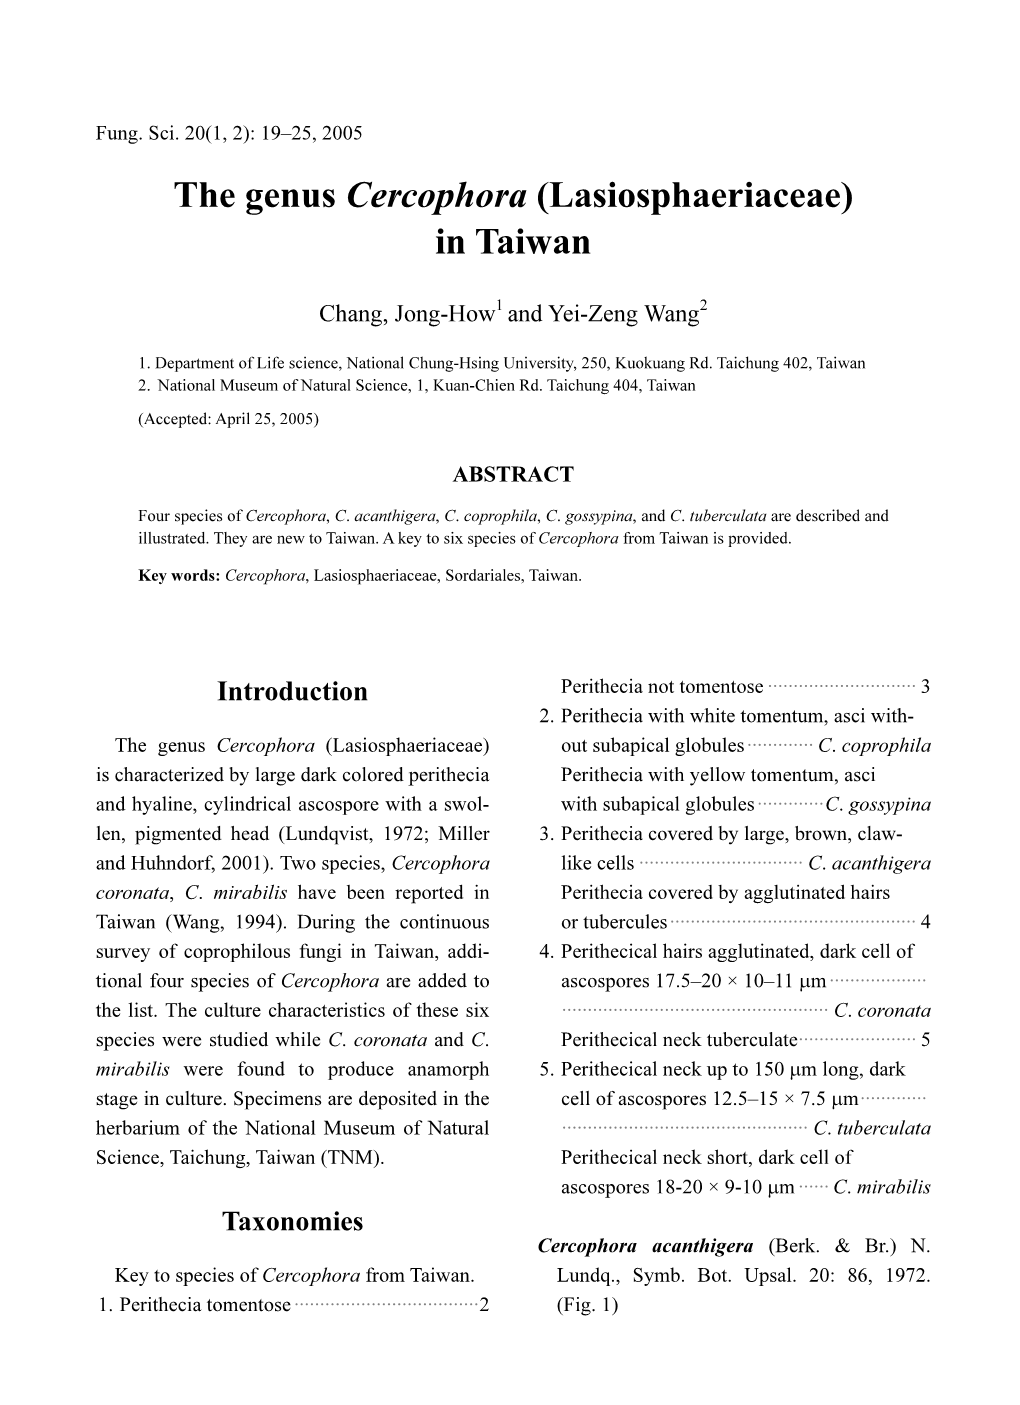 The Genus Cercophora (Lasiosphaeriaceae) in Taiwan